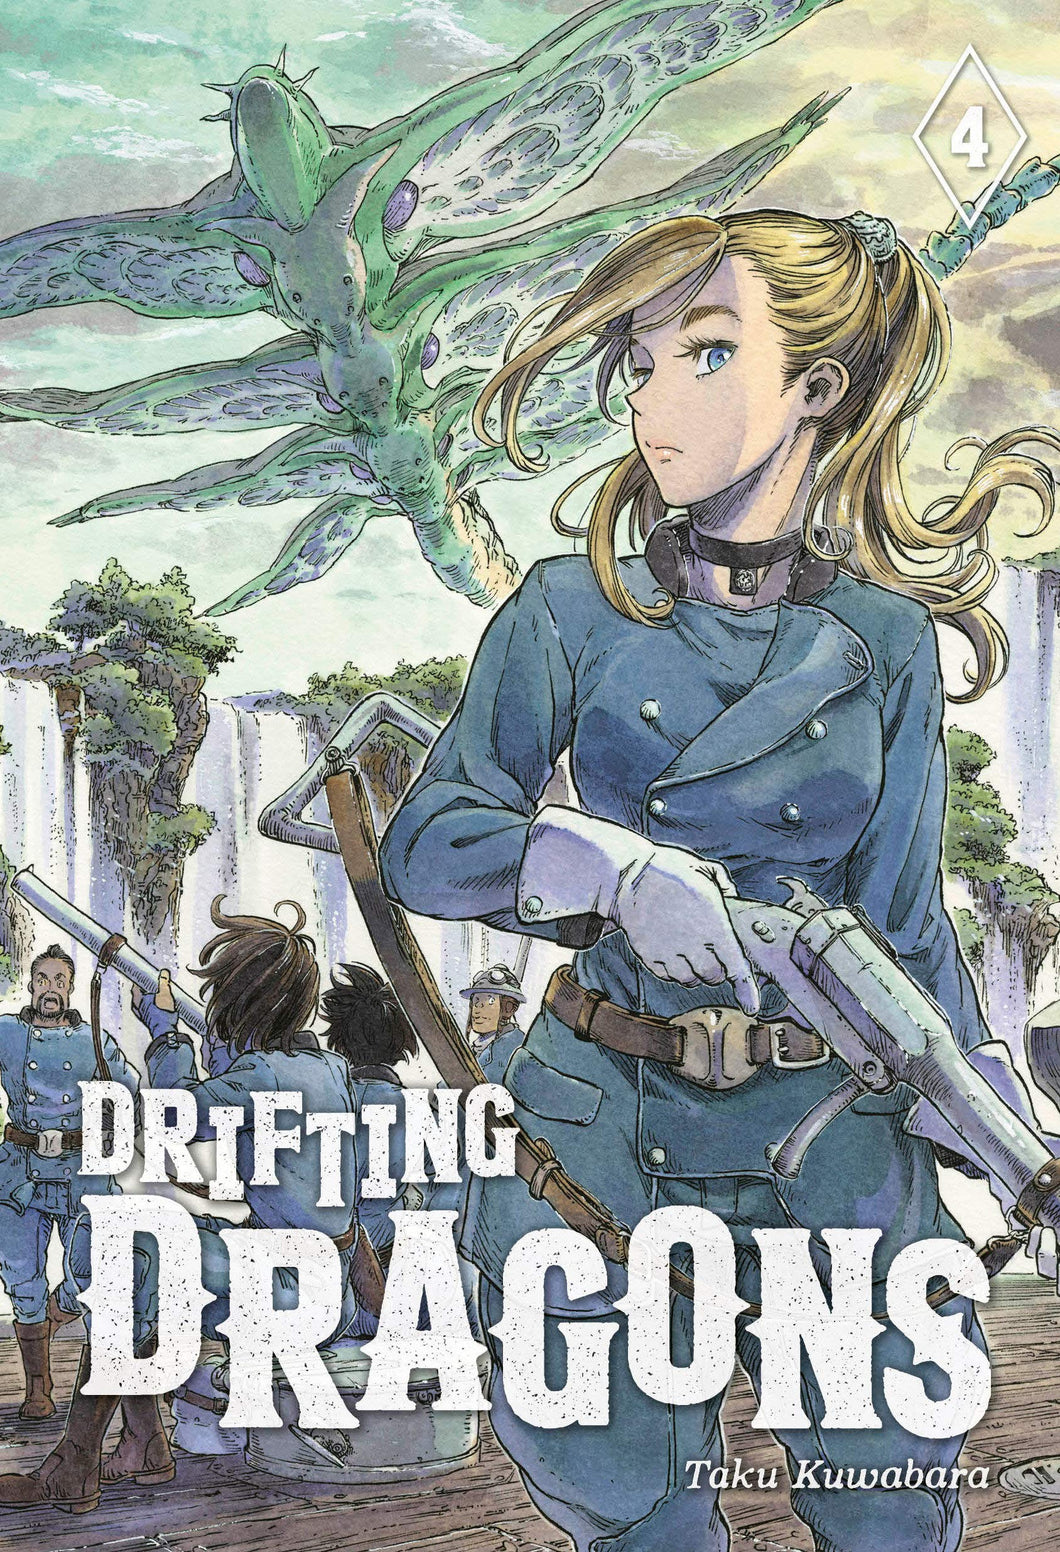 Drifting Dragons Volume 4